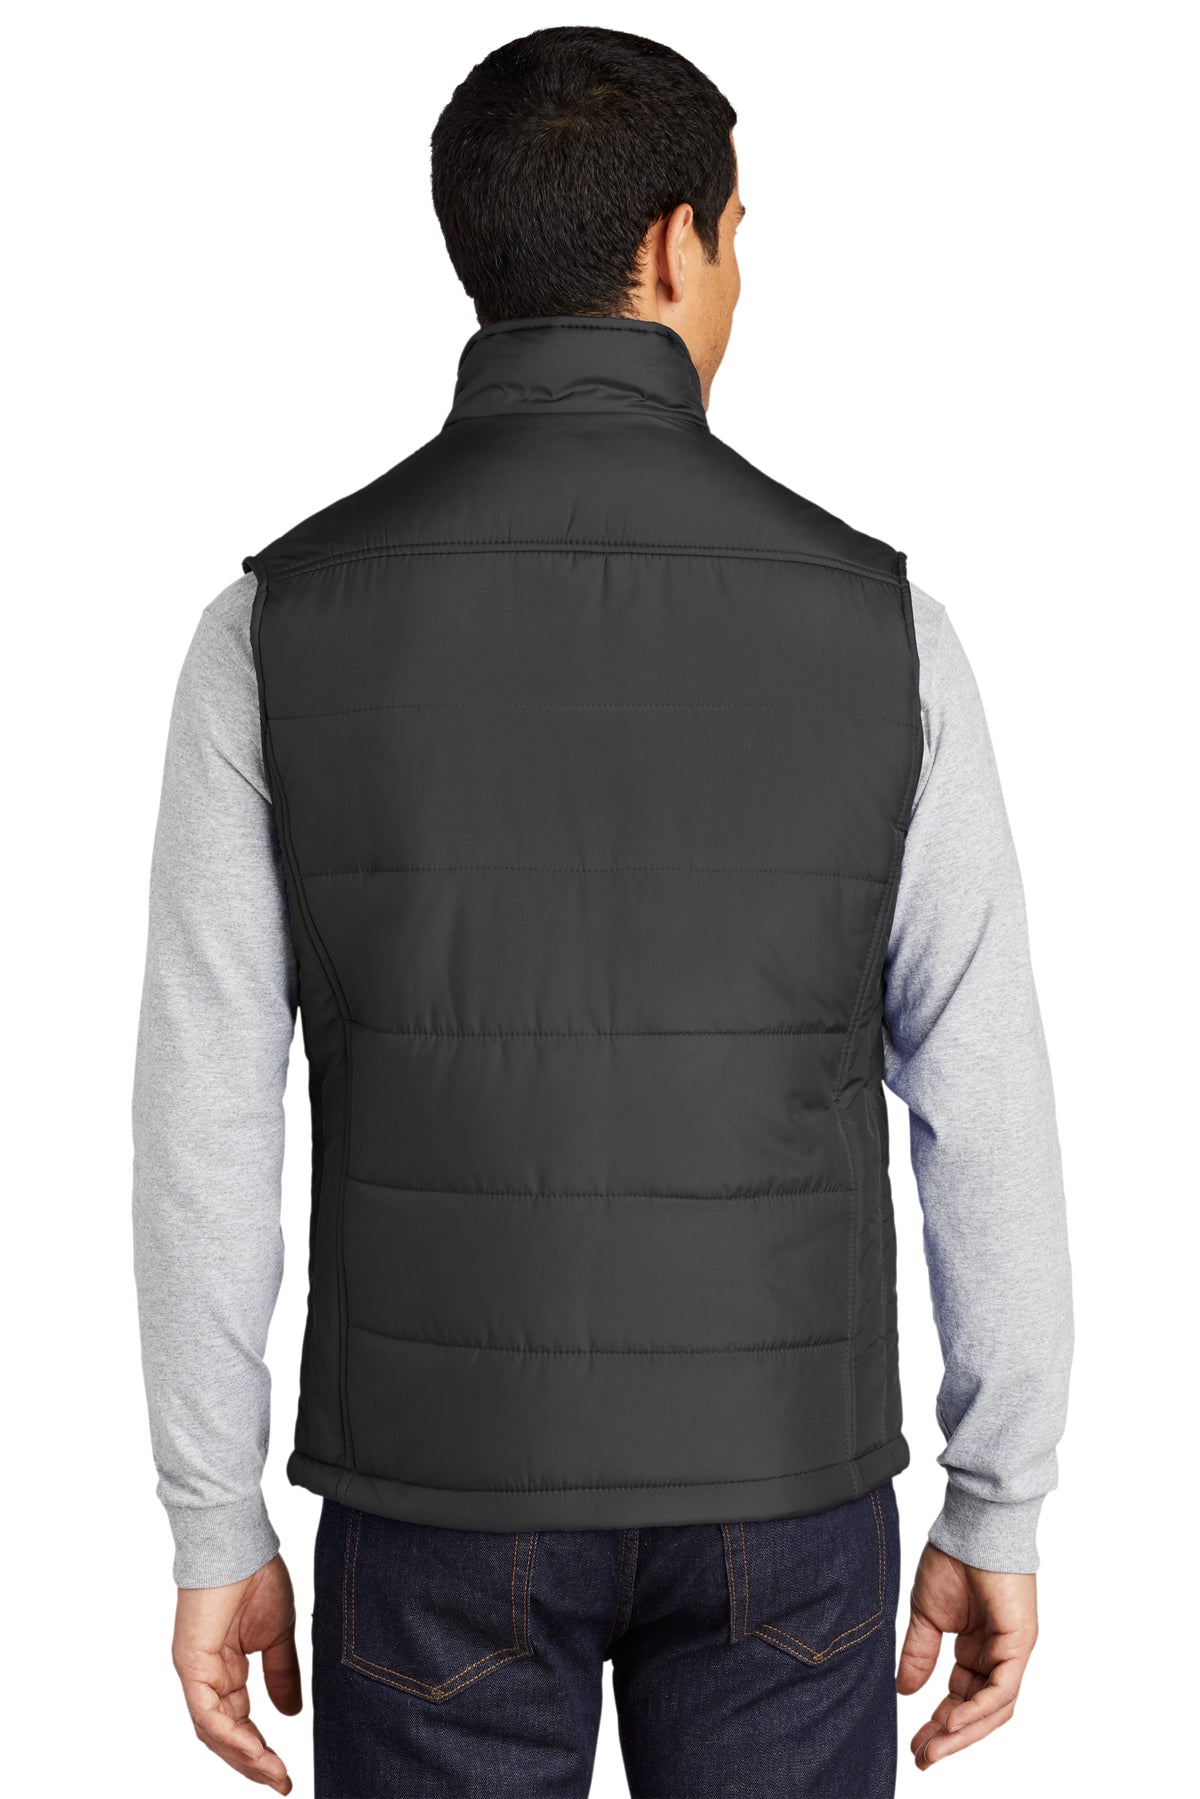 Port Authority Puffy Customized Vests, Black/Black